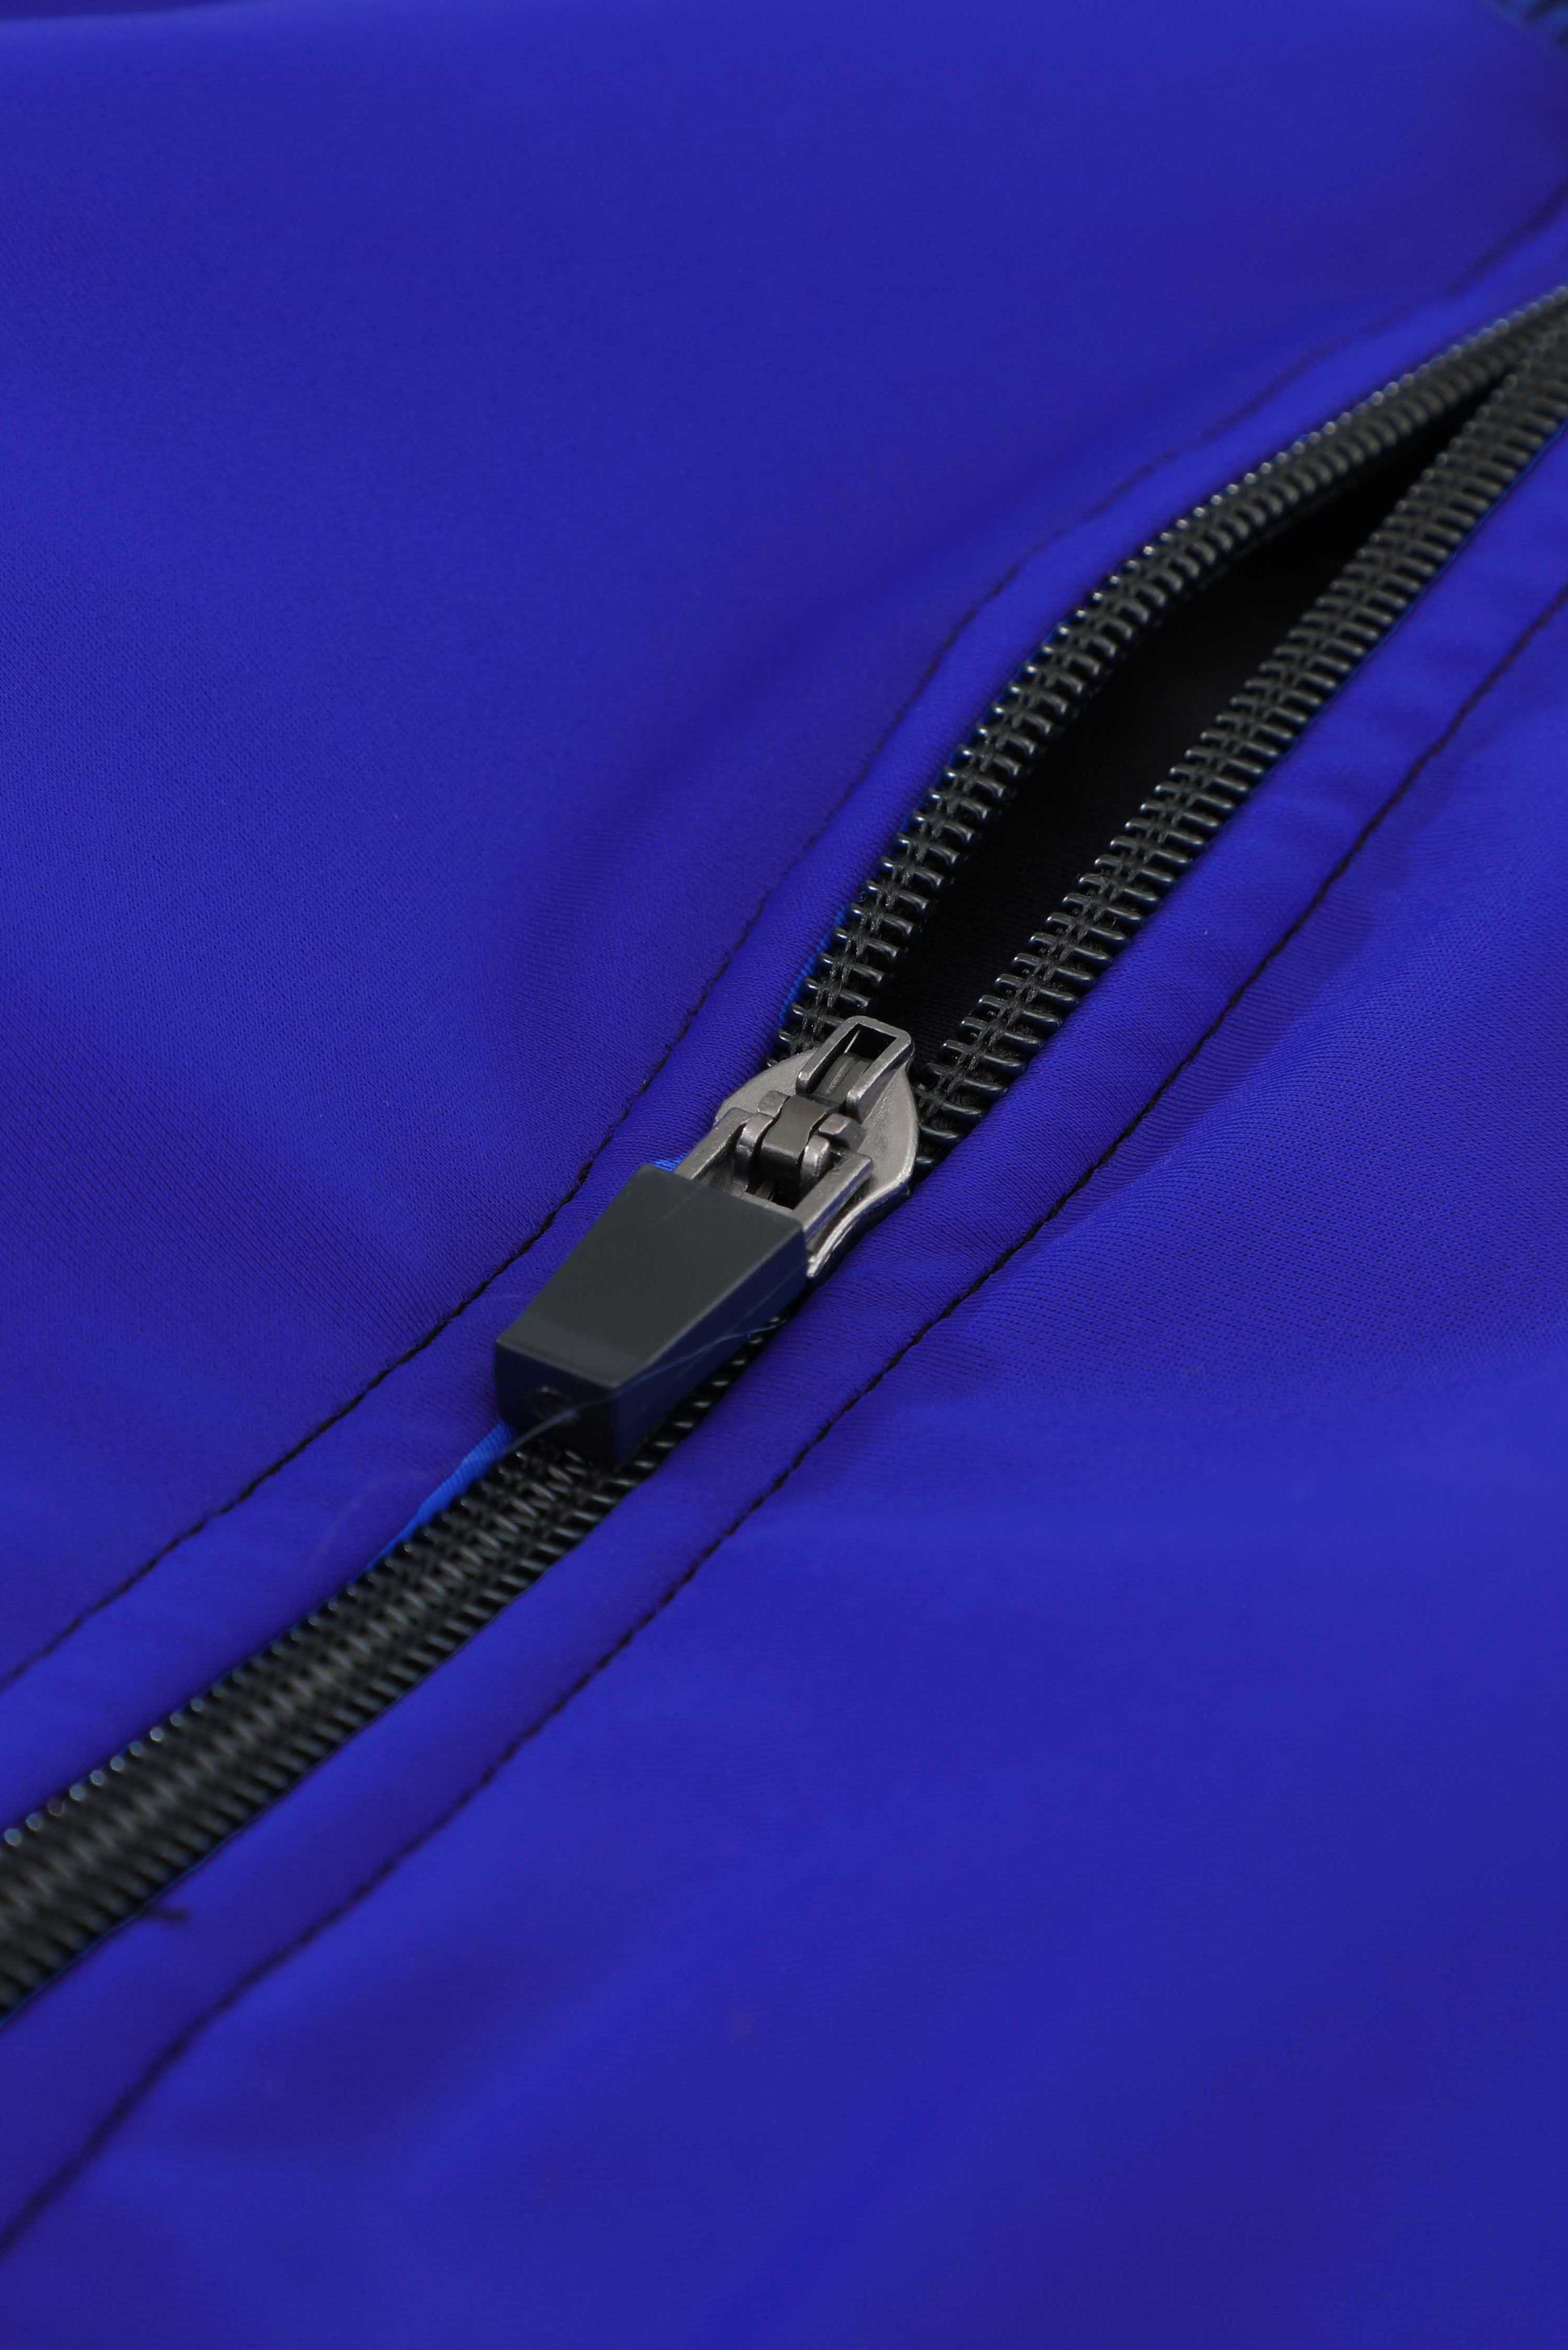 Color Block Half Zip Long Sleeve One-Piece Swimsuit - Online Only